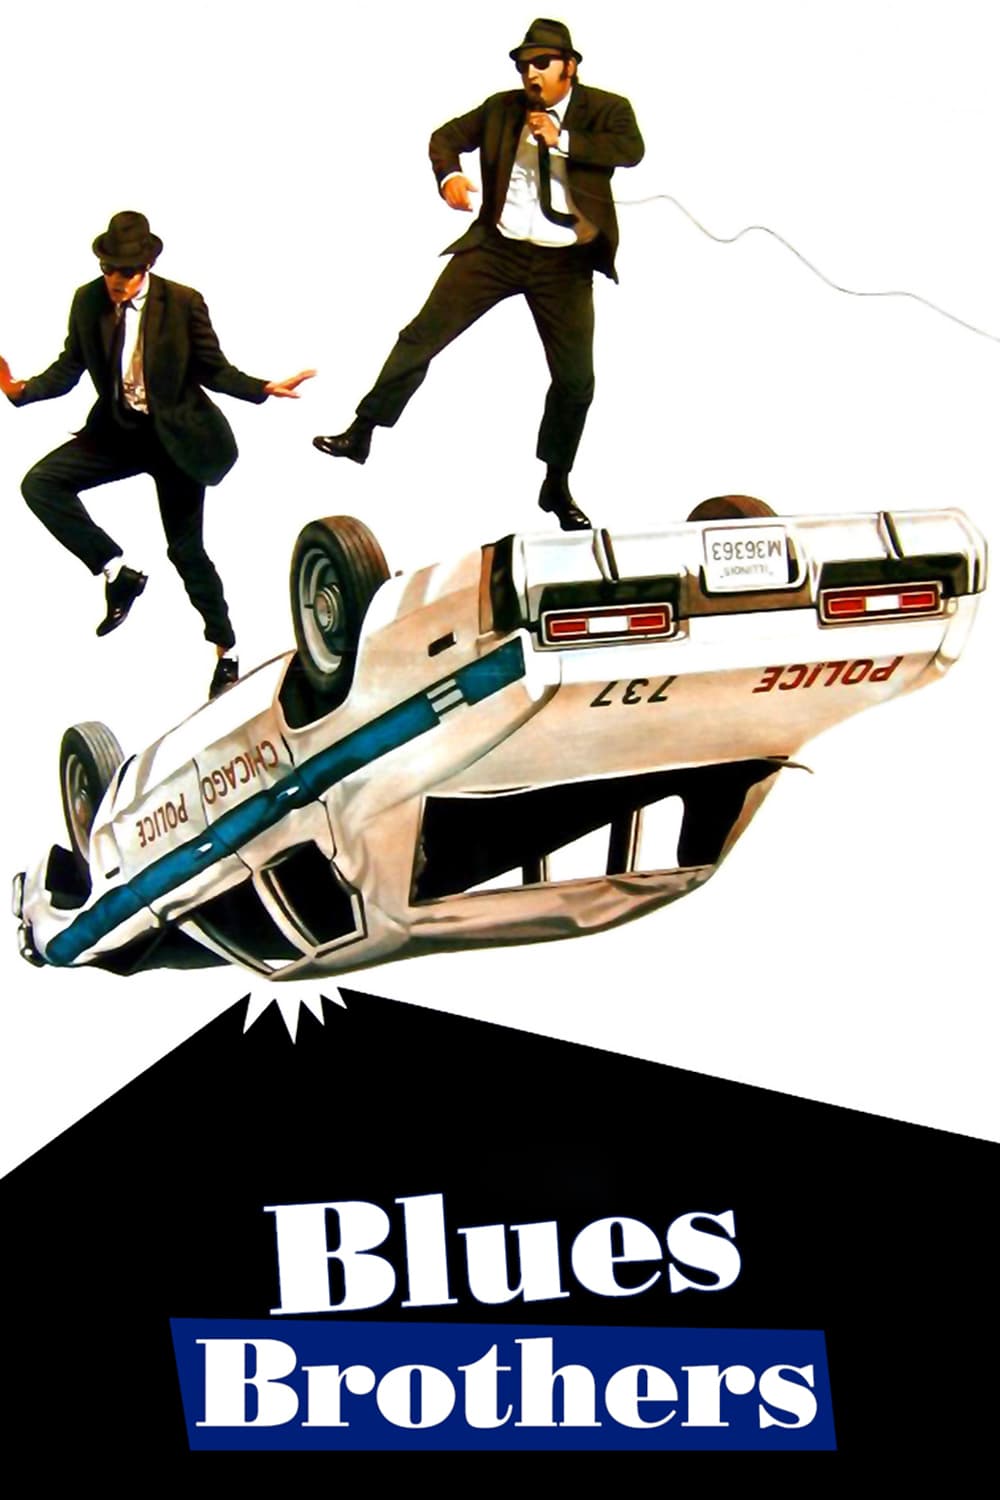 Plakat von "Blues Brothers"